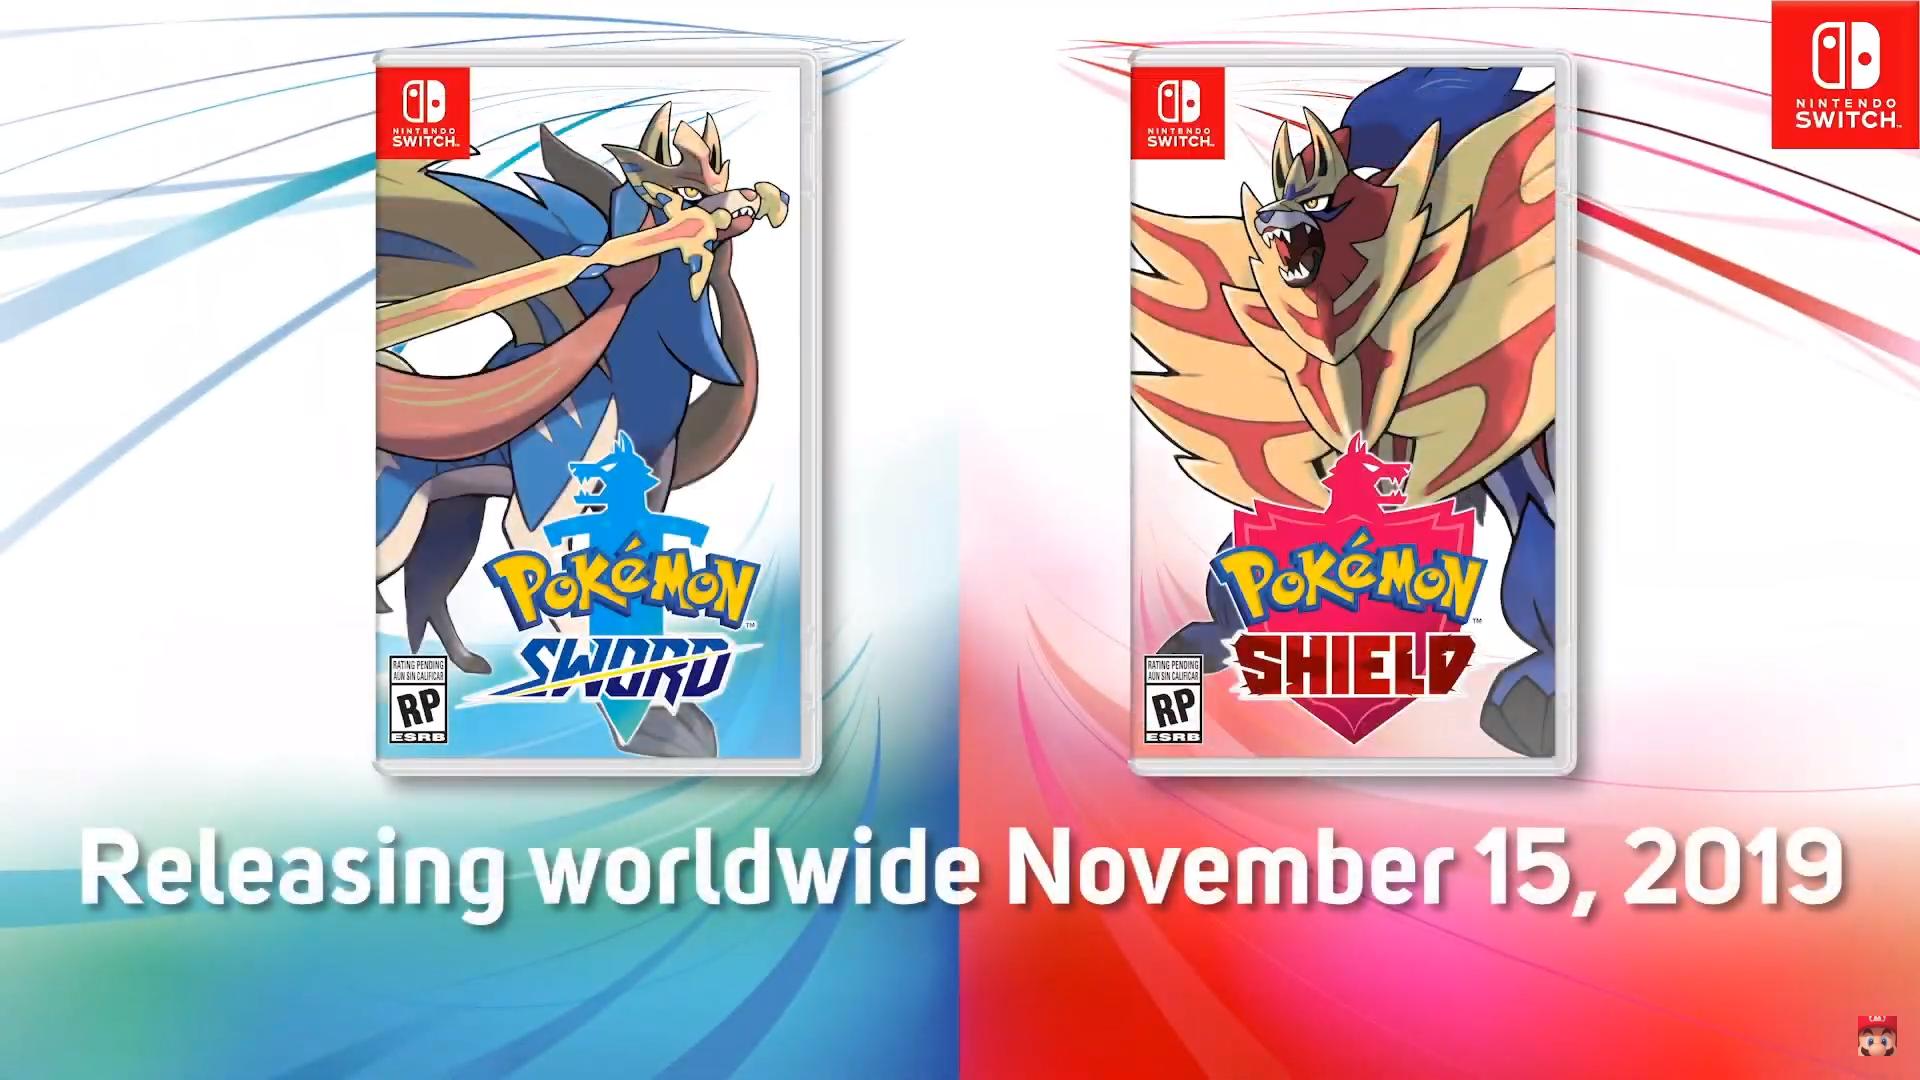  Pokémon Sword and Pokémon Shield Double Pack - Nintendo Switch  : Nintendo of America: Video Games